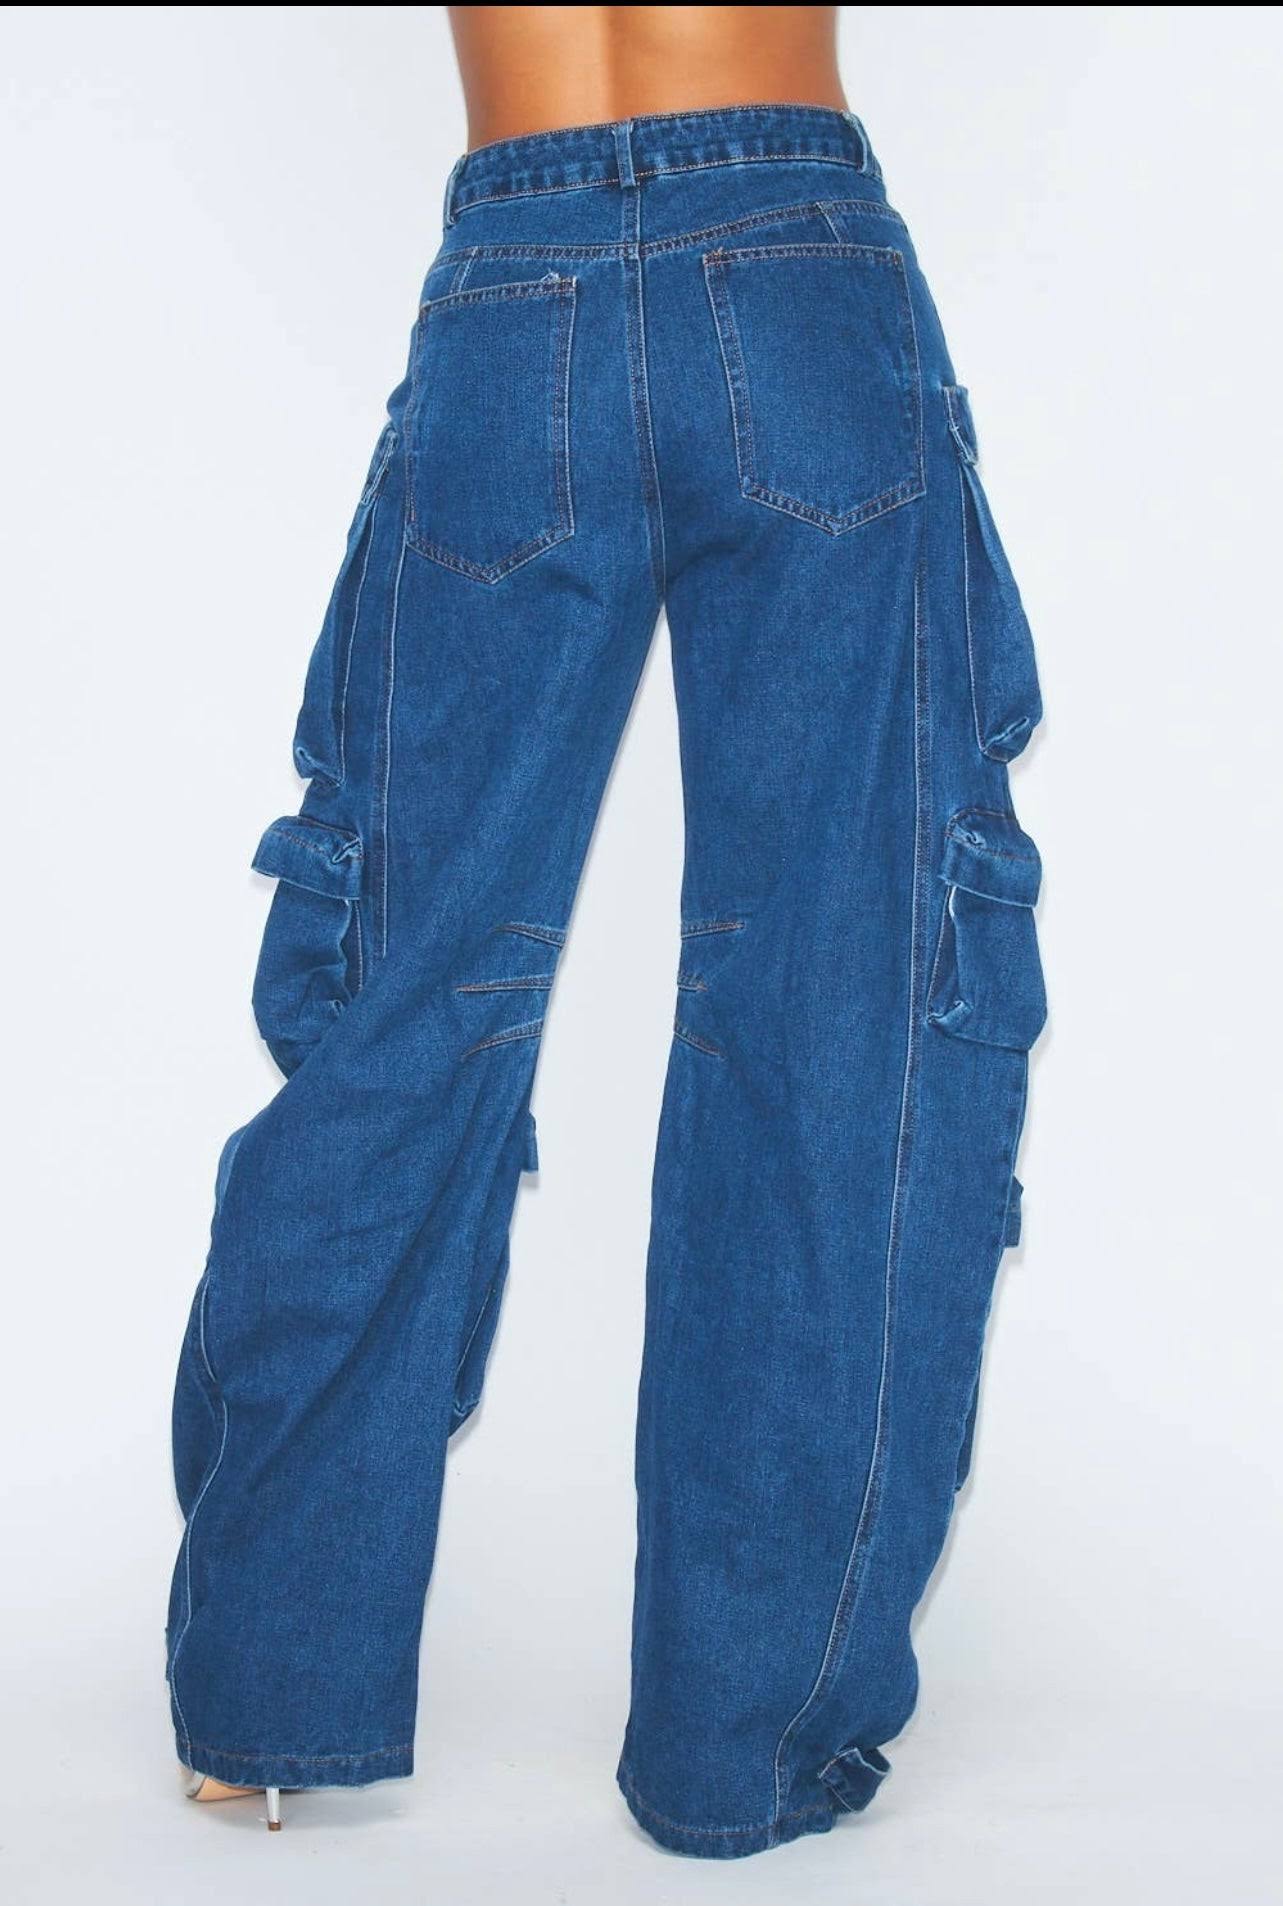 Macea Cargo Pocket Jeans